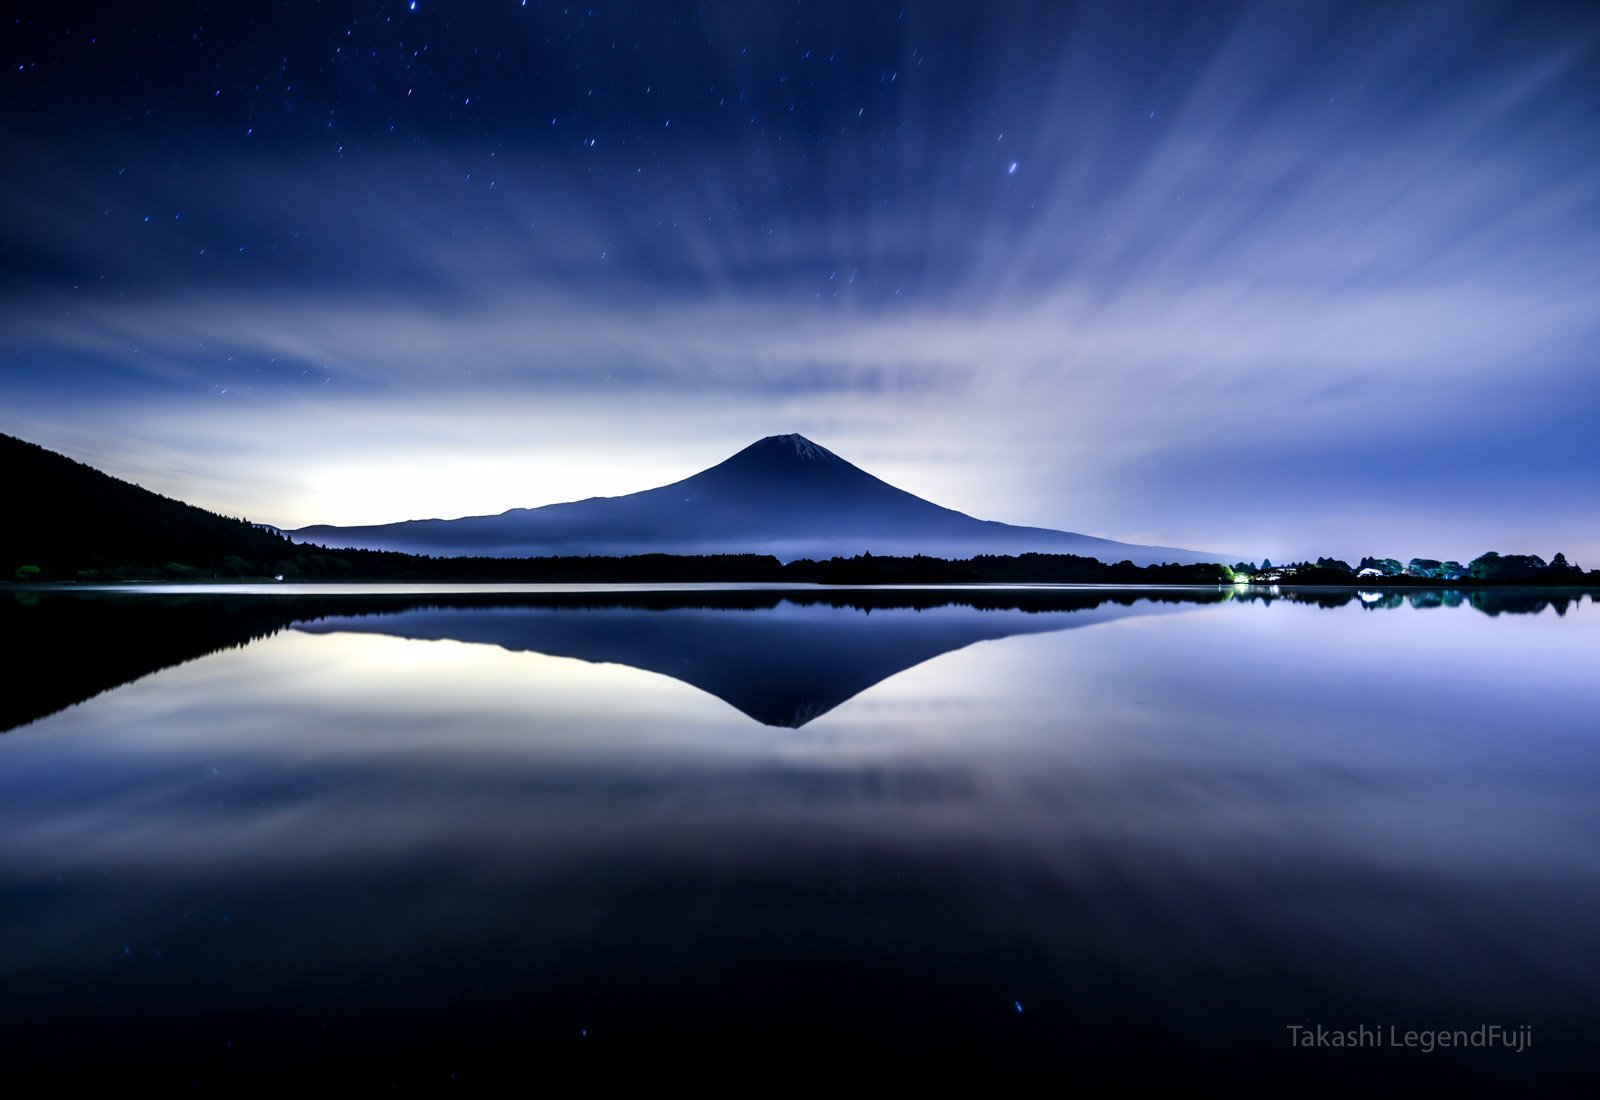 Fuji,mountain,Japan,lake,water,reflection,cloud,star,night,blue,, Takashi